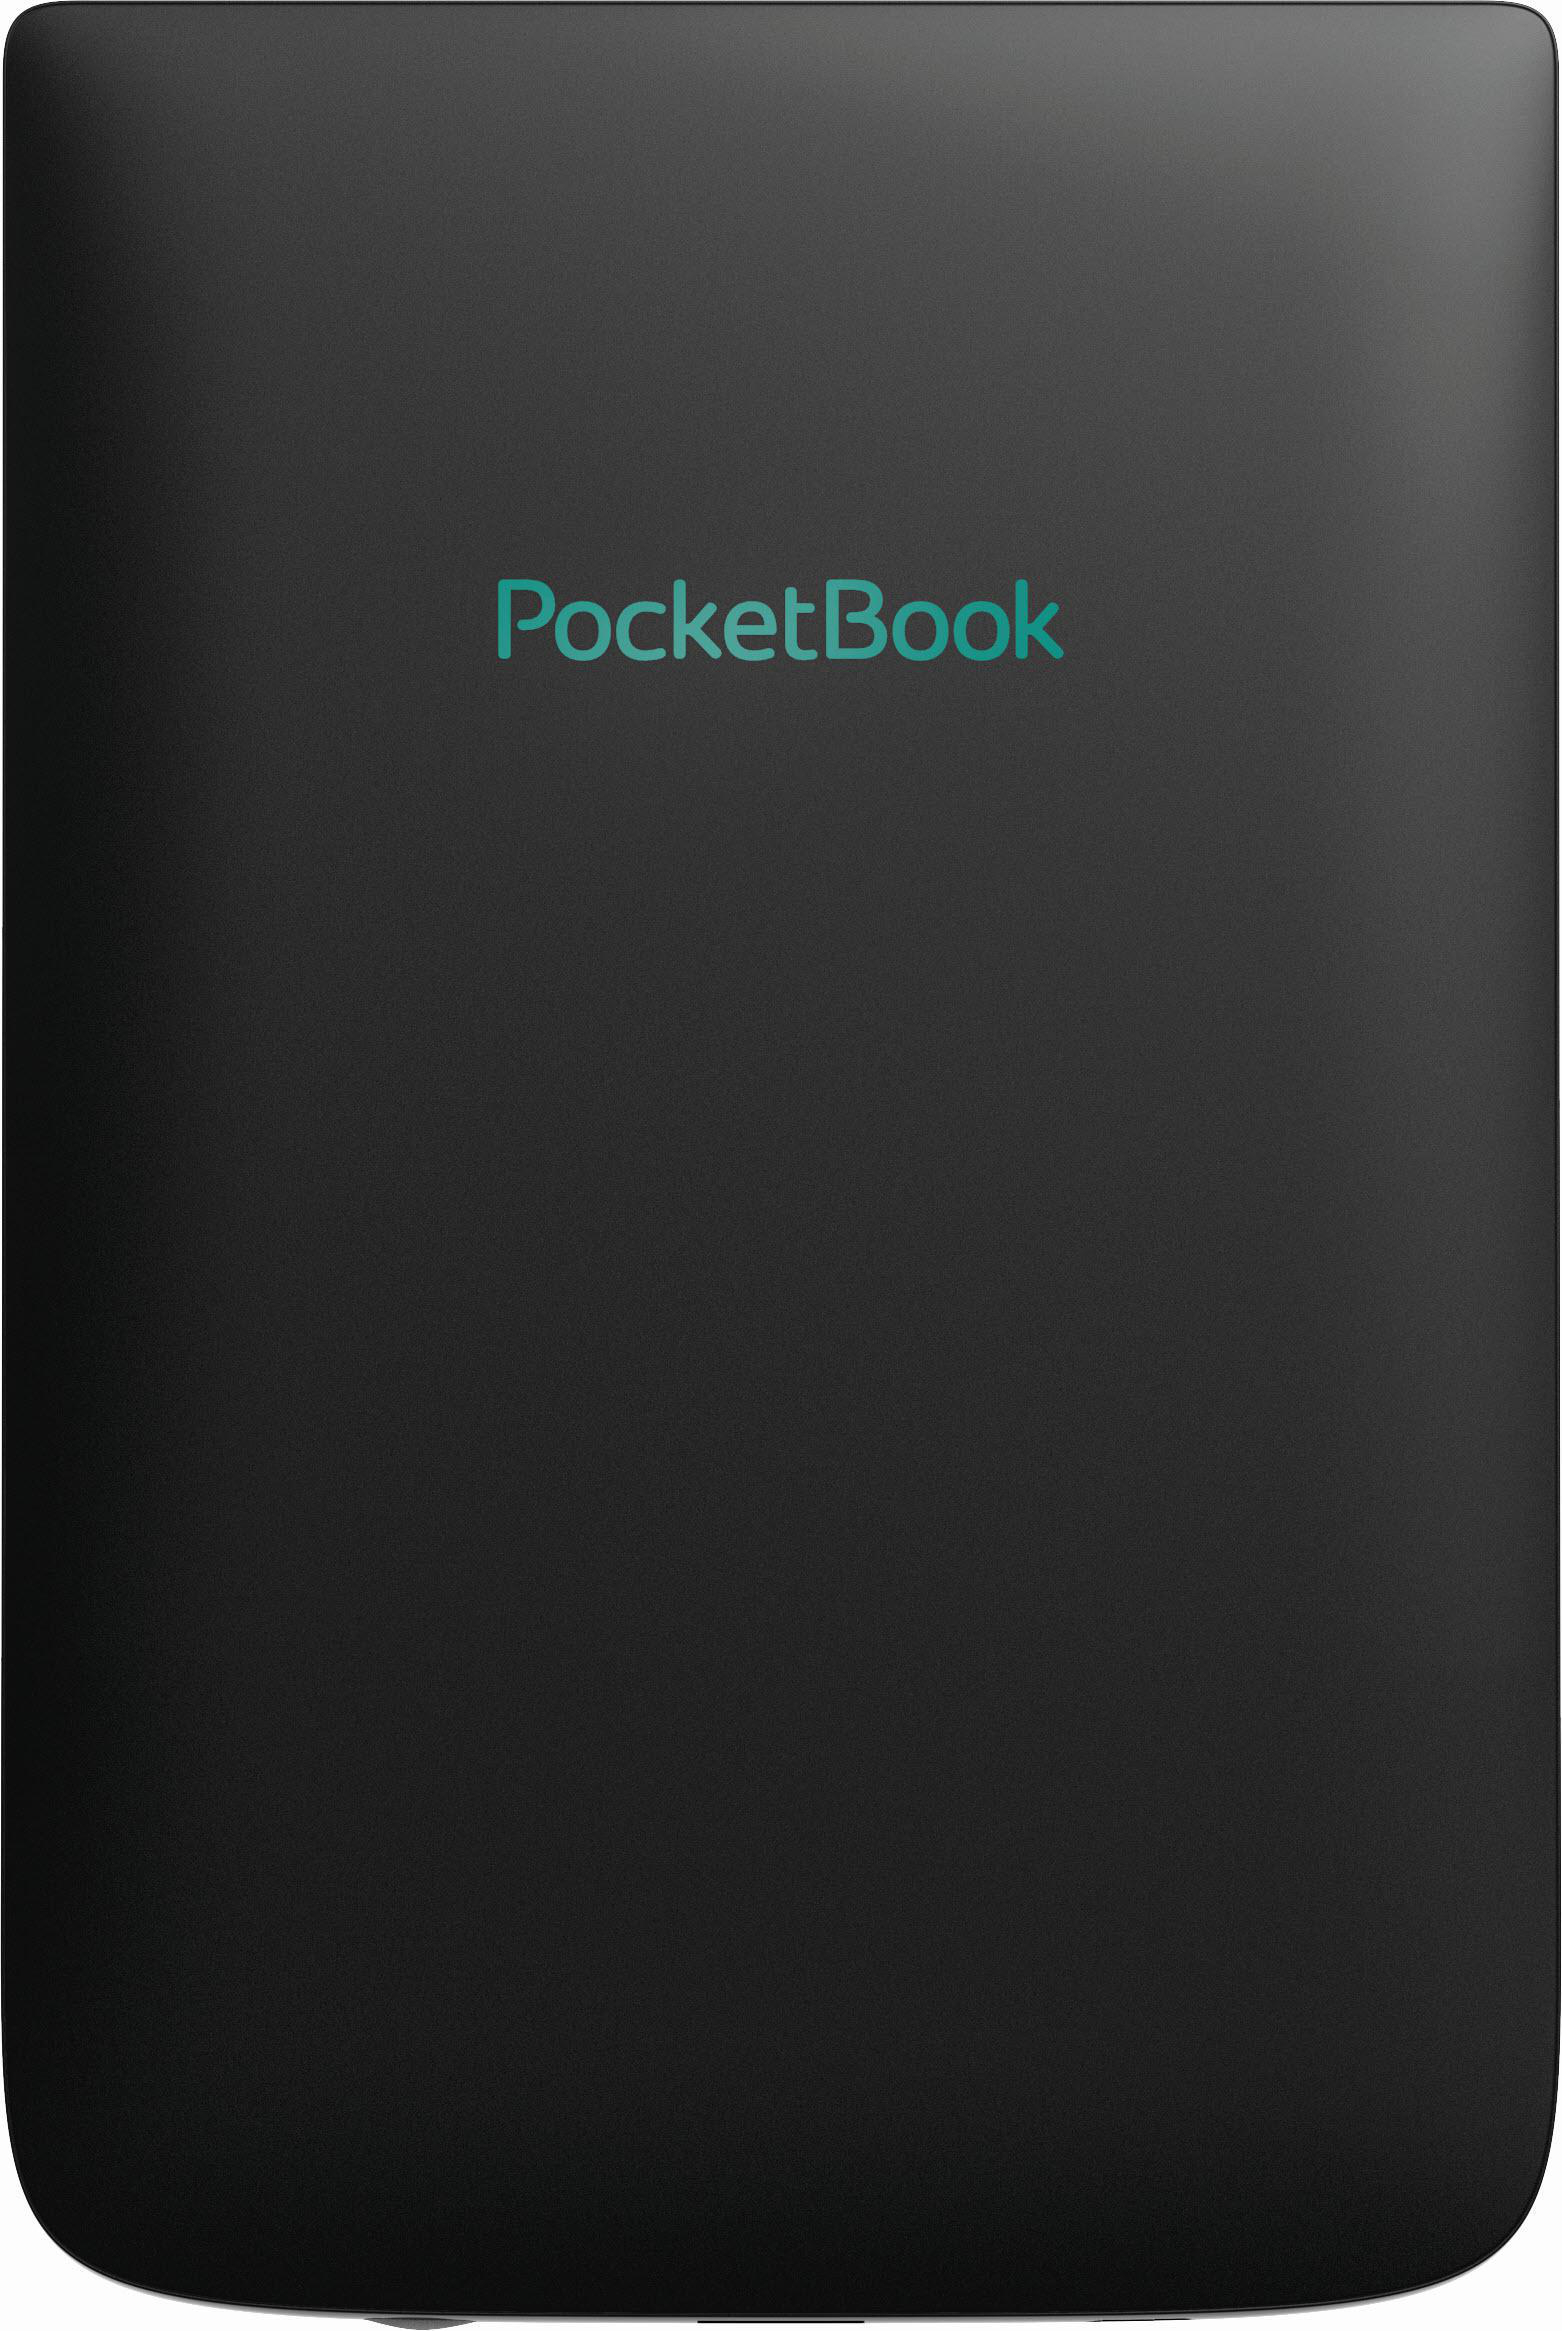 POCKETBOOK Basic 4 Black 8 GB Schwarz eBook-Reader